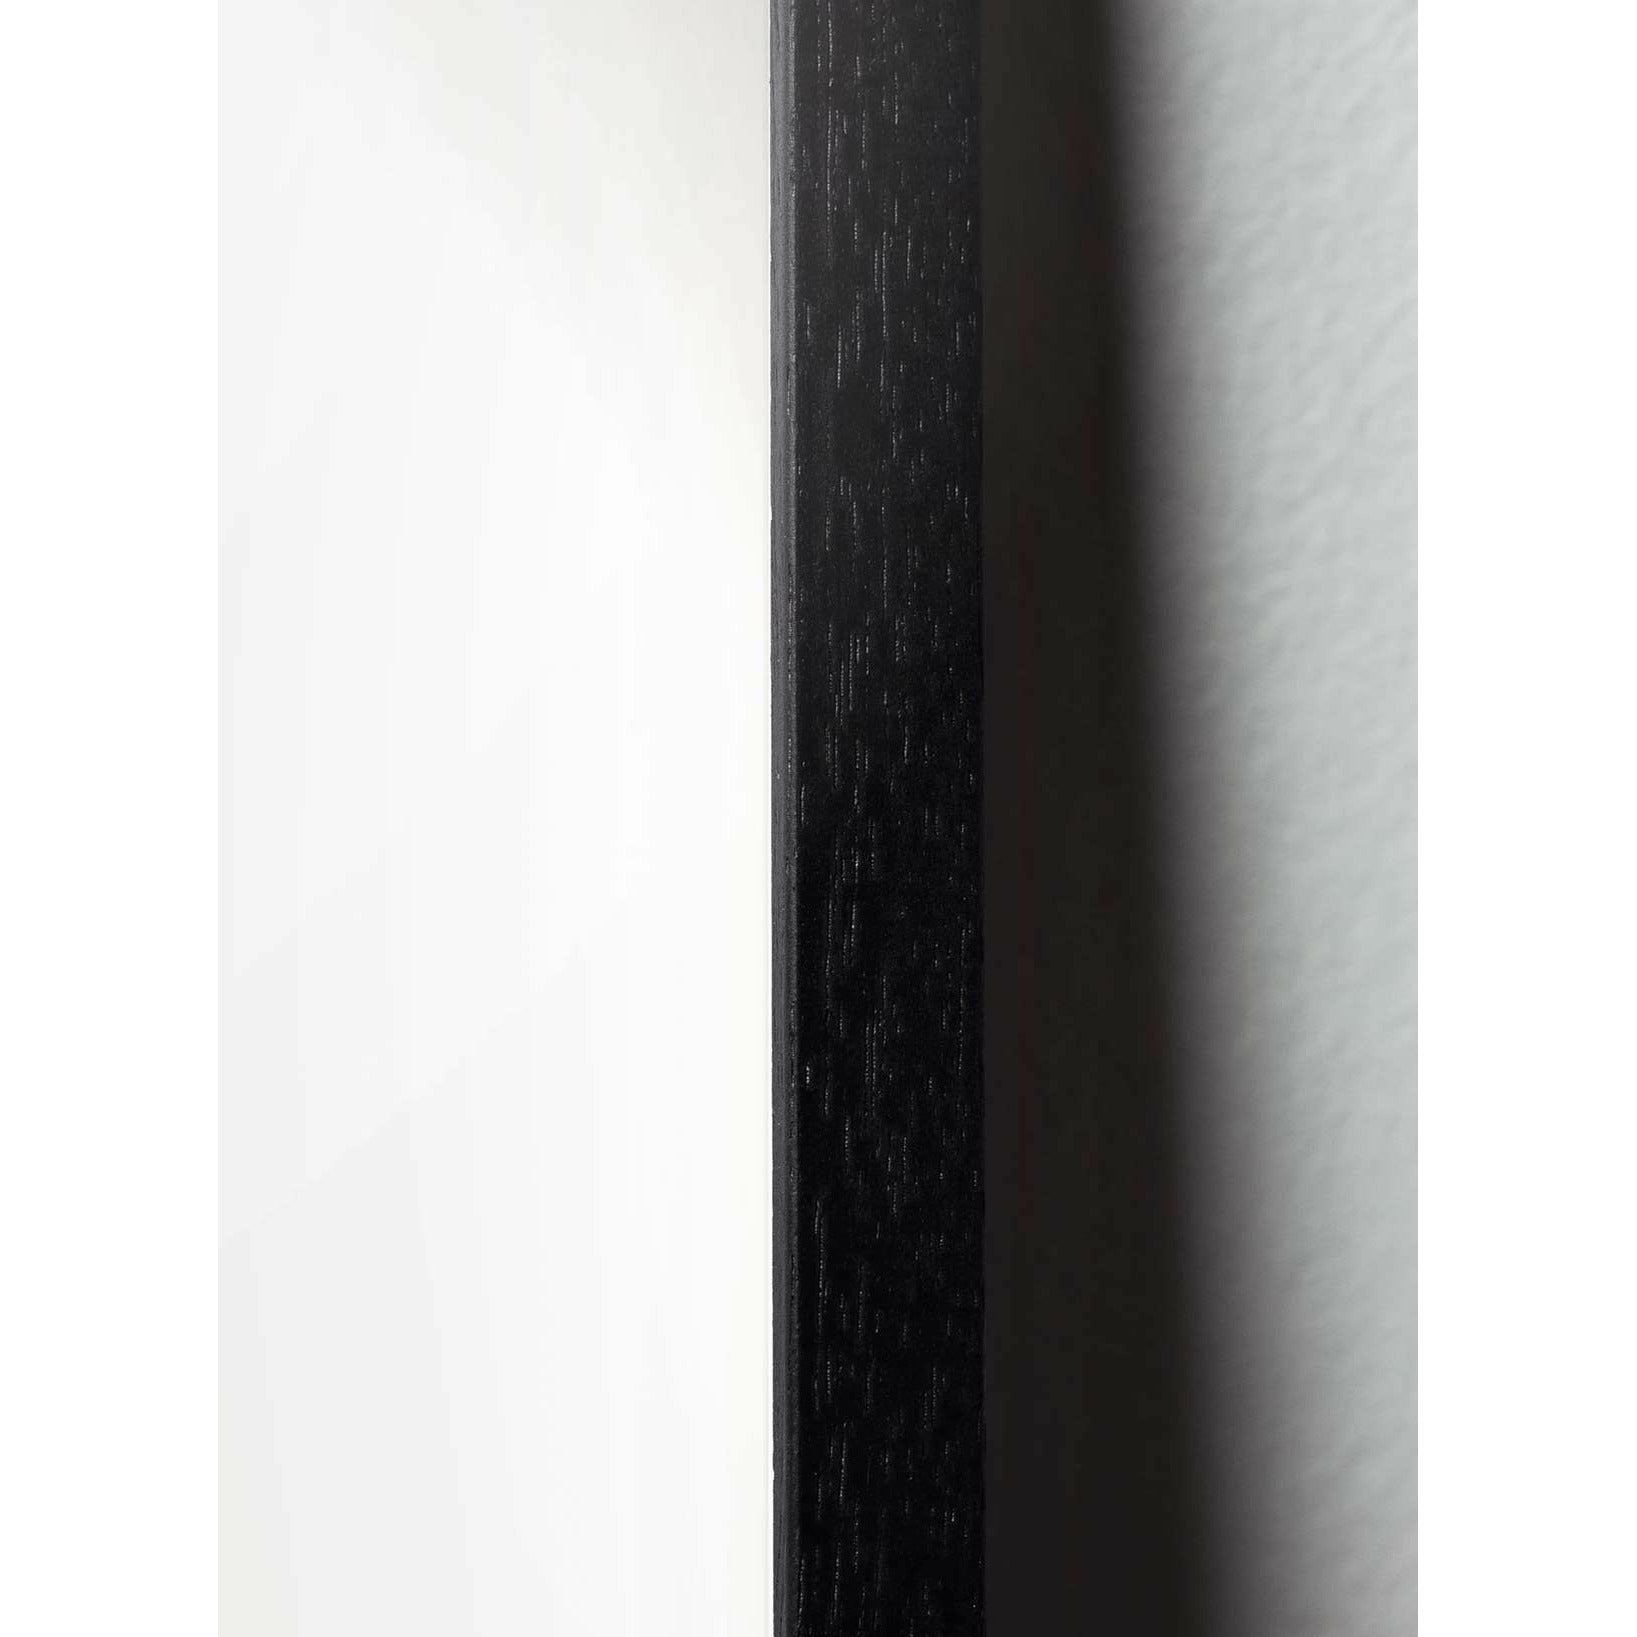 Póster de la línea de osito de peluche de creación, marco en madera lacada negra A5, fondo azul